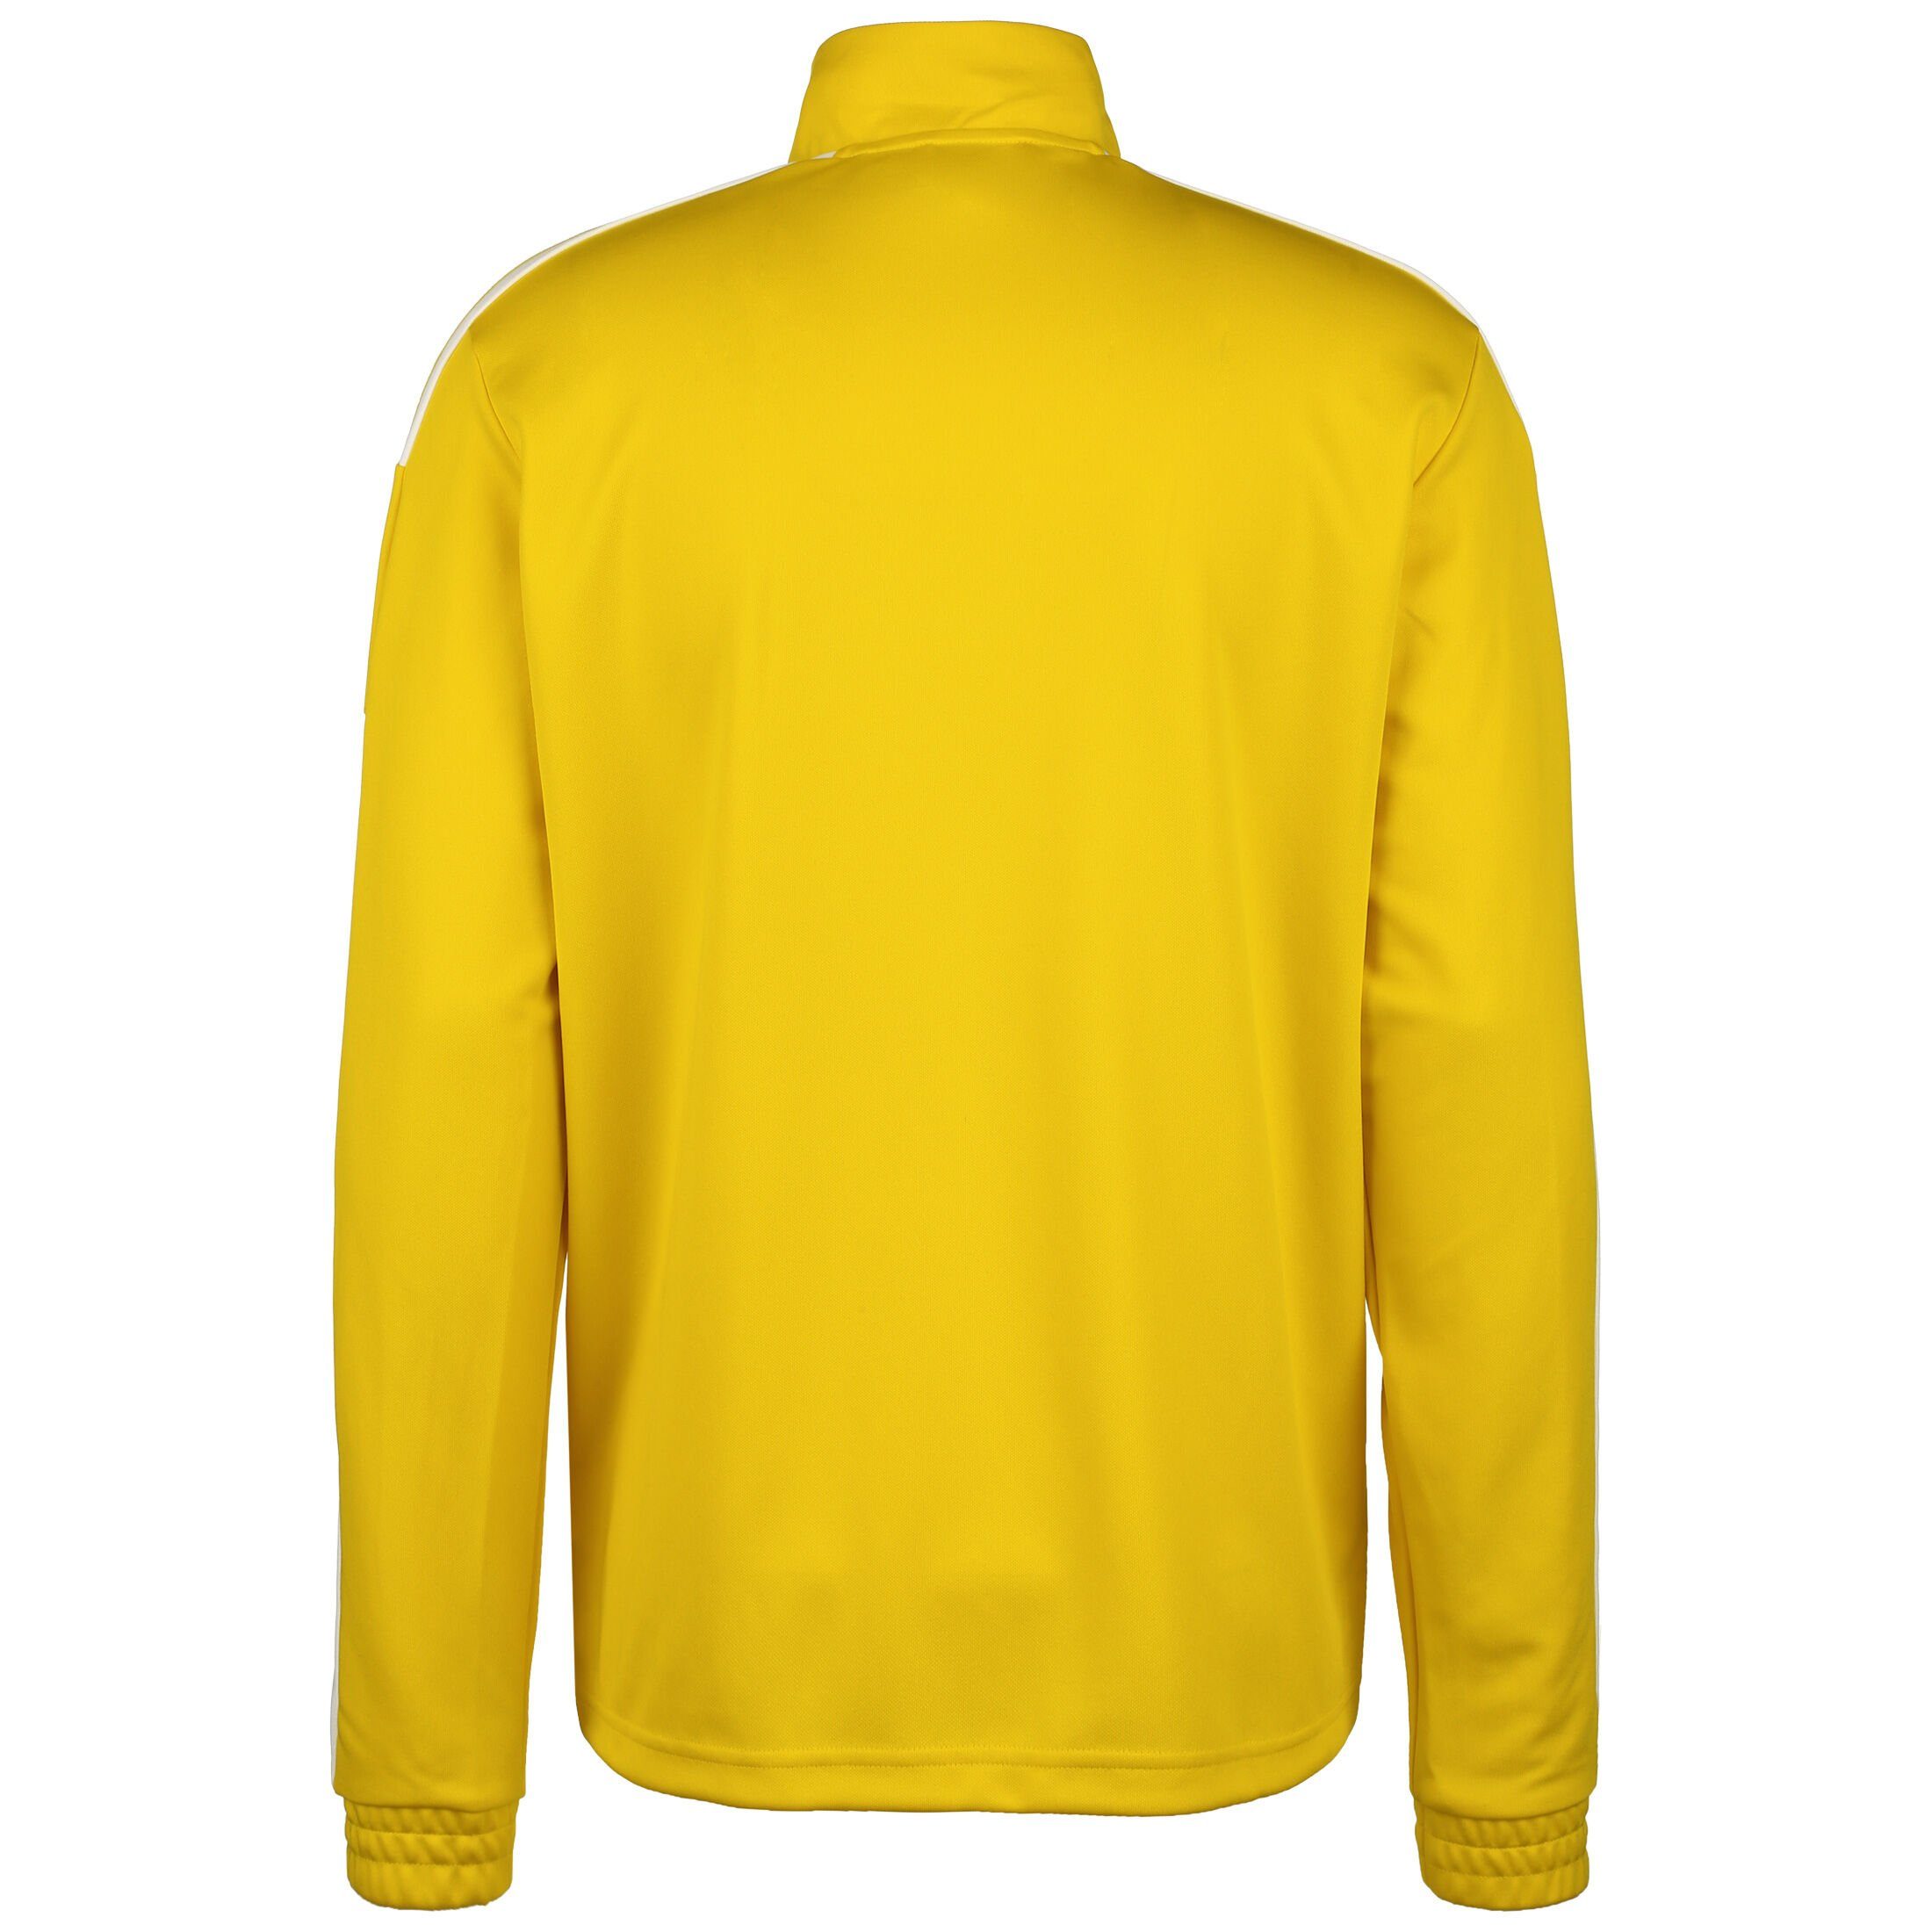 Performance 21 Sweatshirt / Herren weiß Trainingssweat gelb Squadra adidas